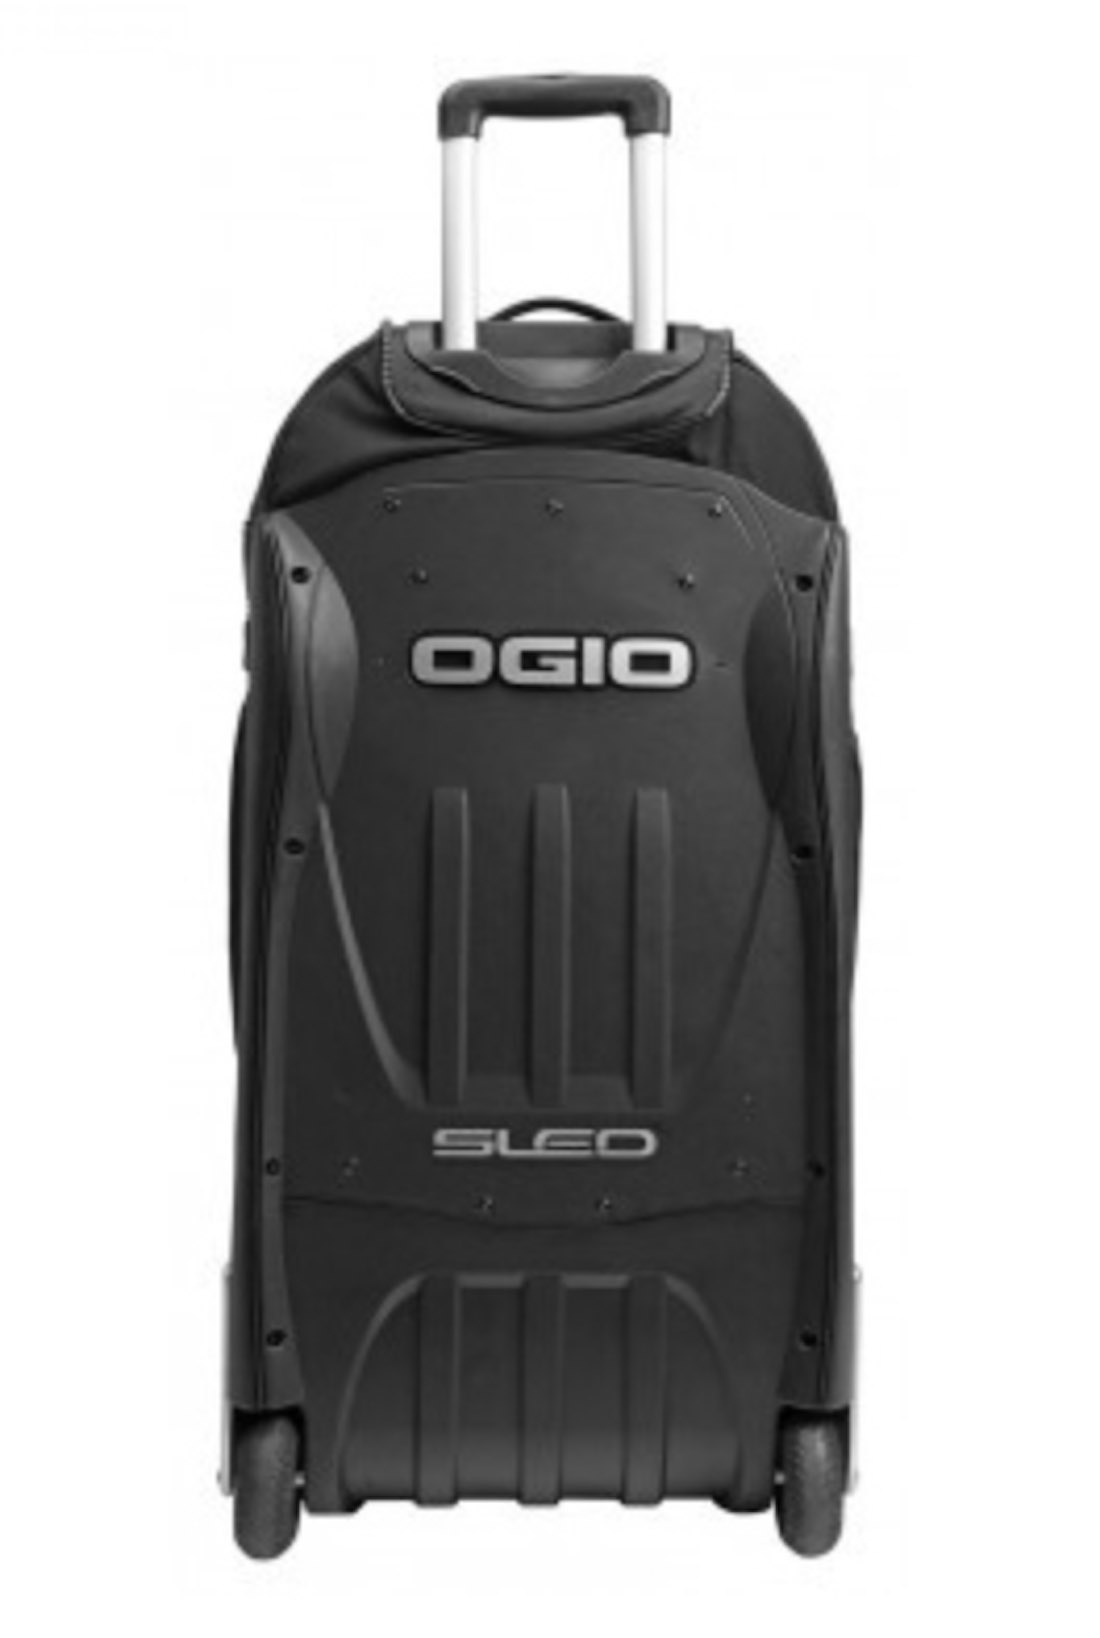 Ogio RID 9800